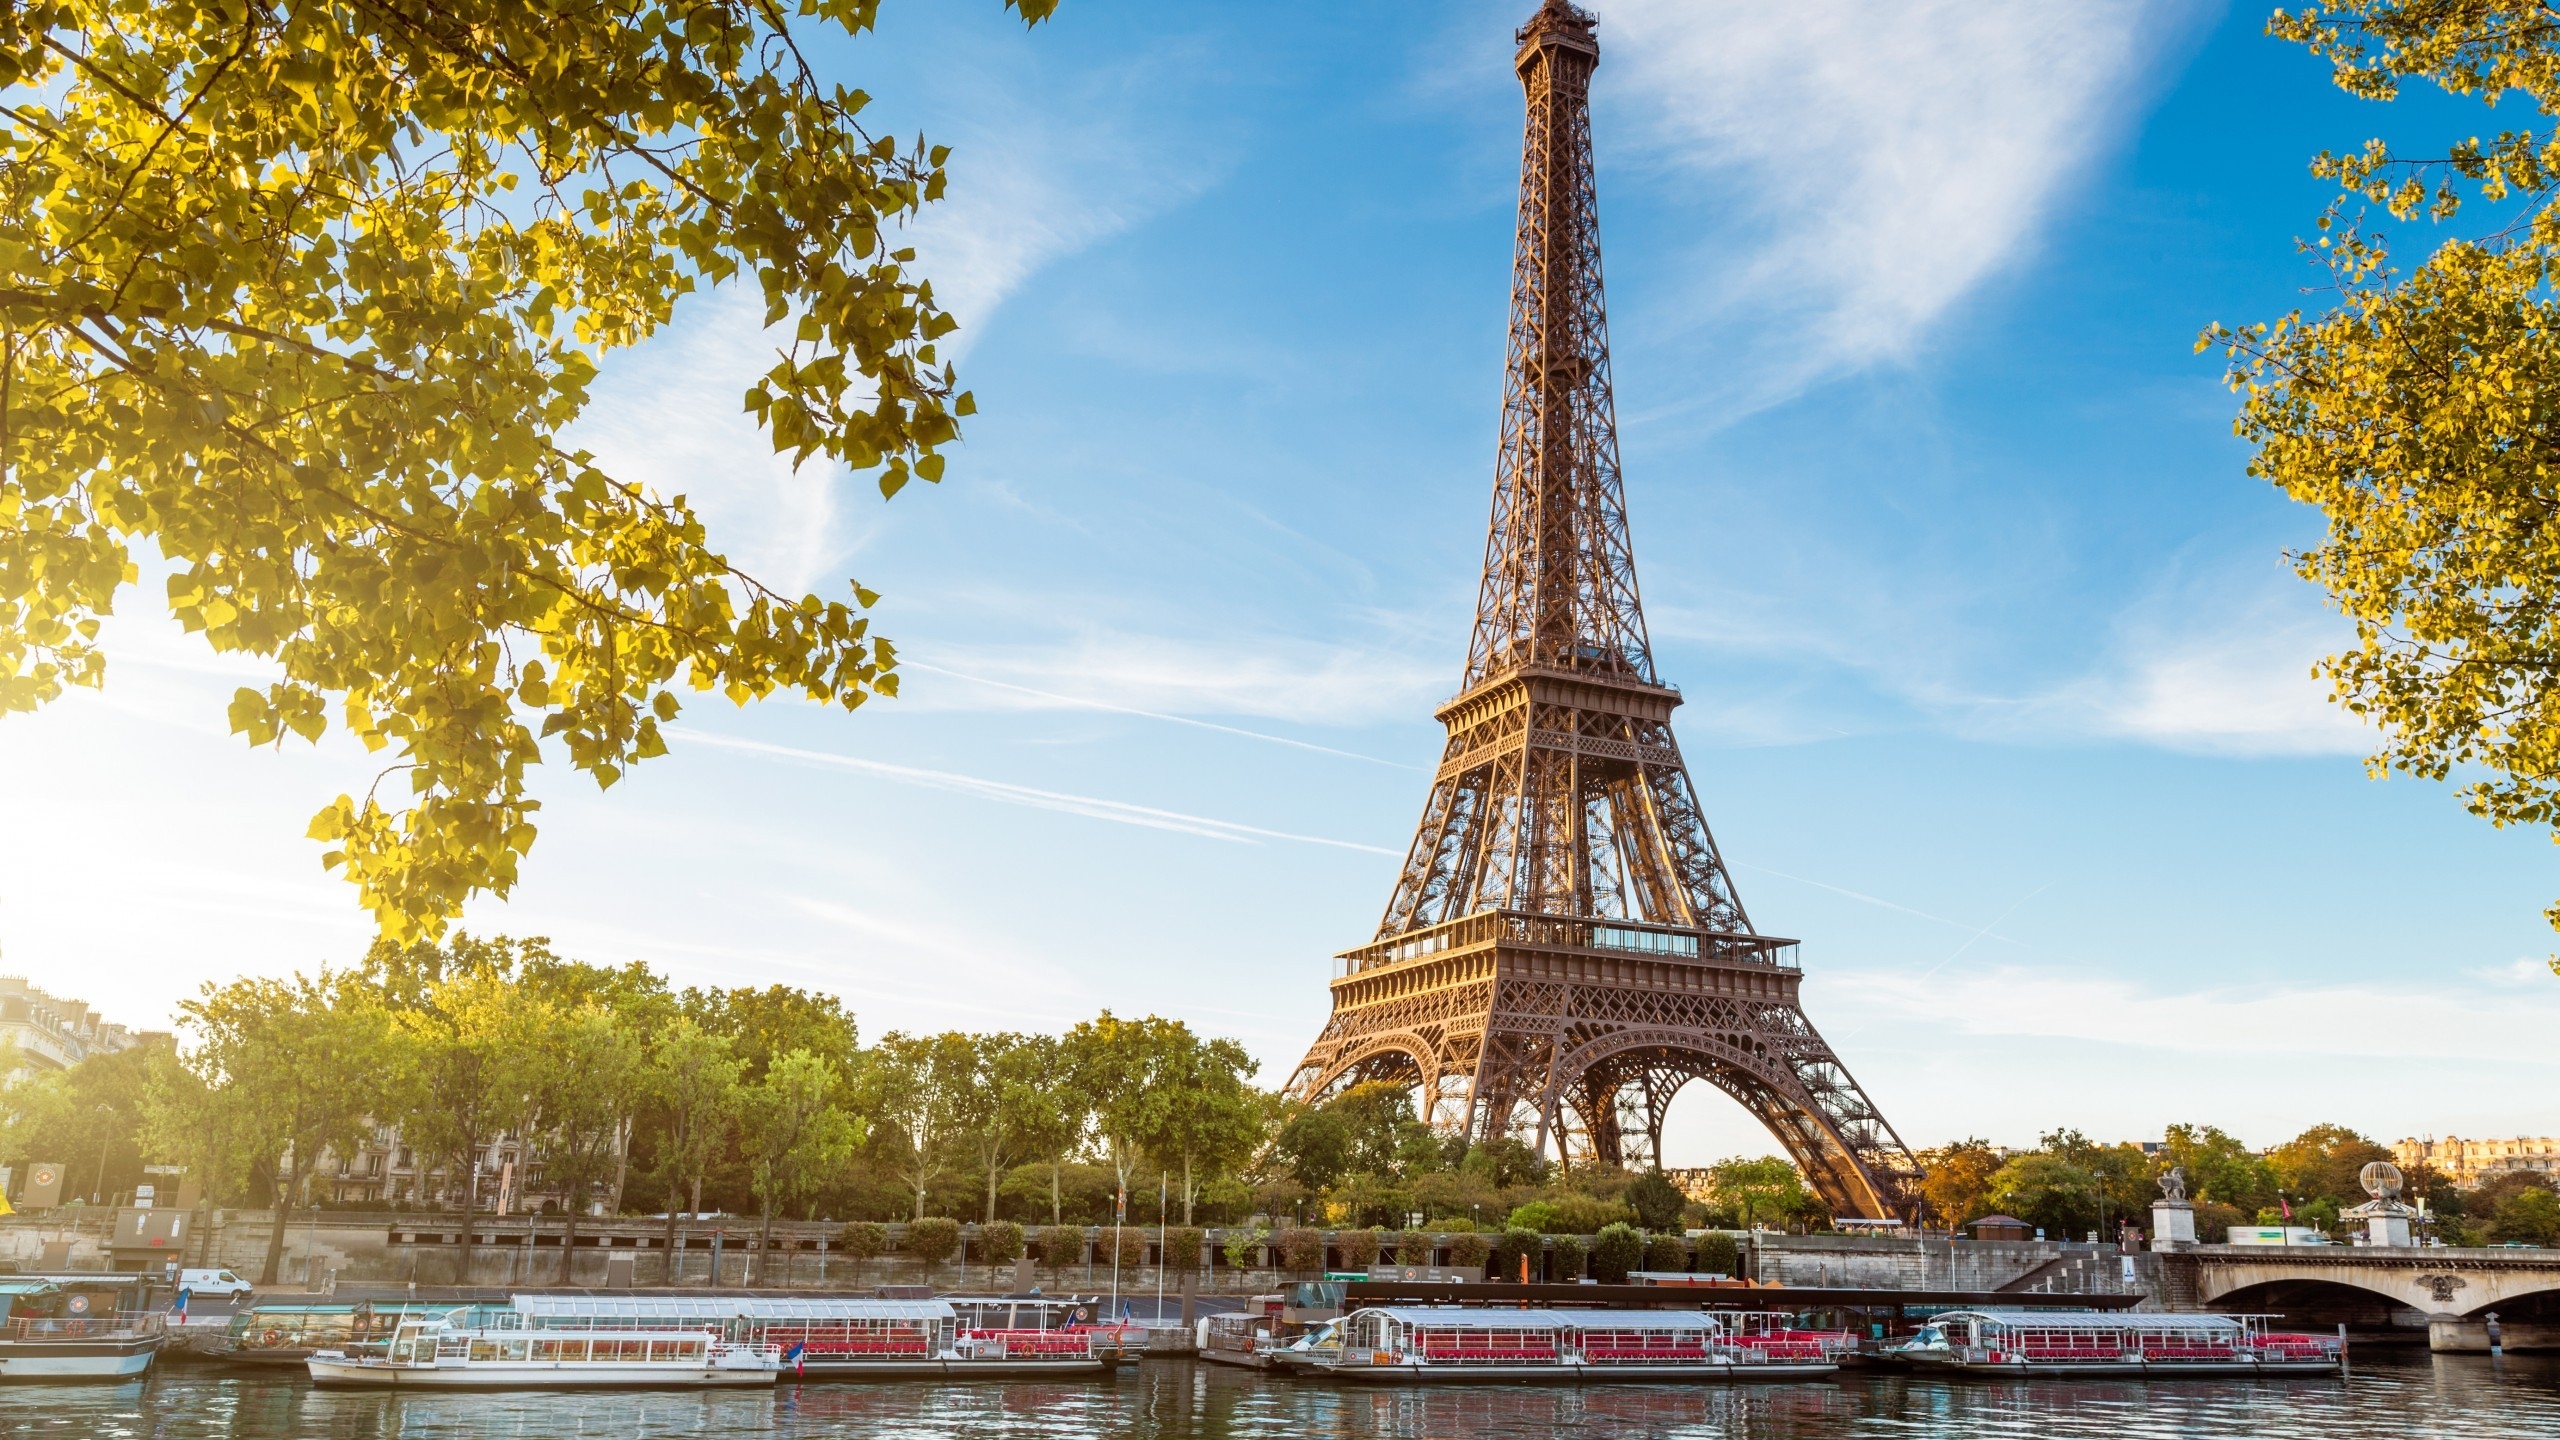 Eiffel Tower Landscape for 2560x1440 HDTV resolution